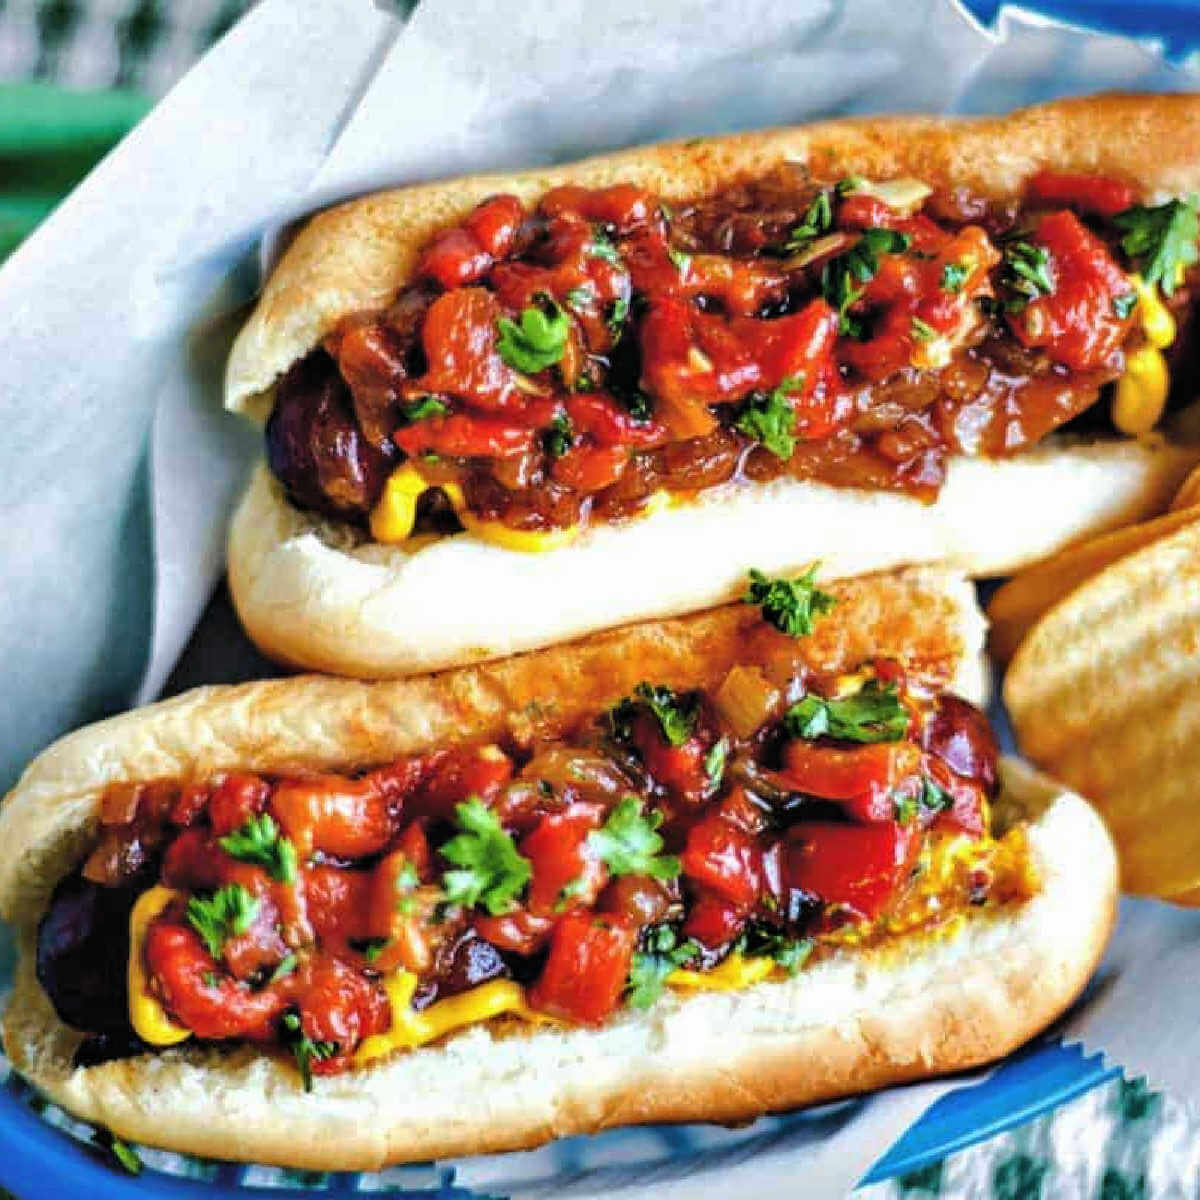 Gene’s Hot Dog (Mustard, Relish, Onions)